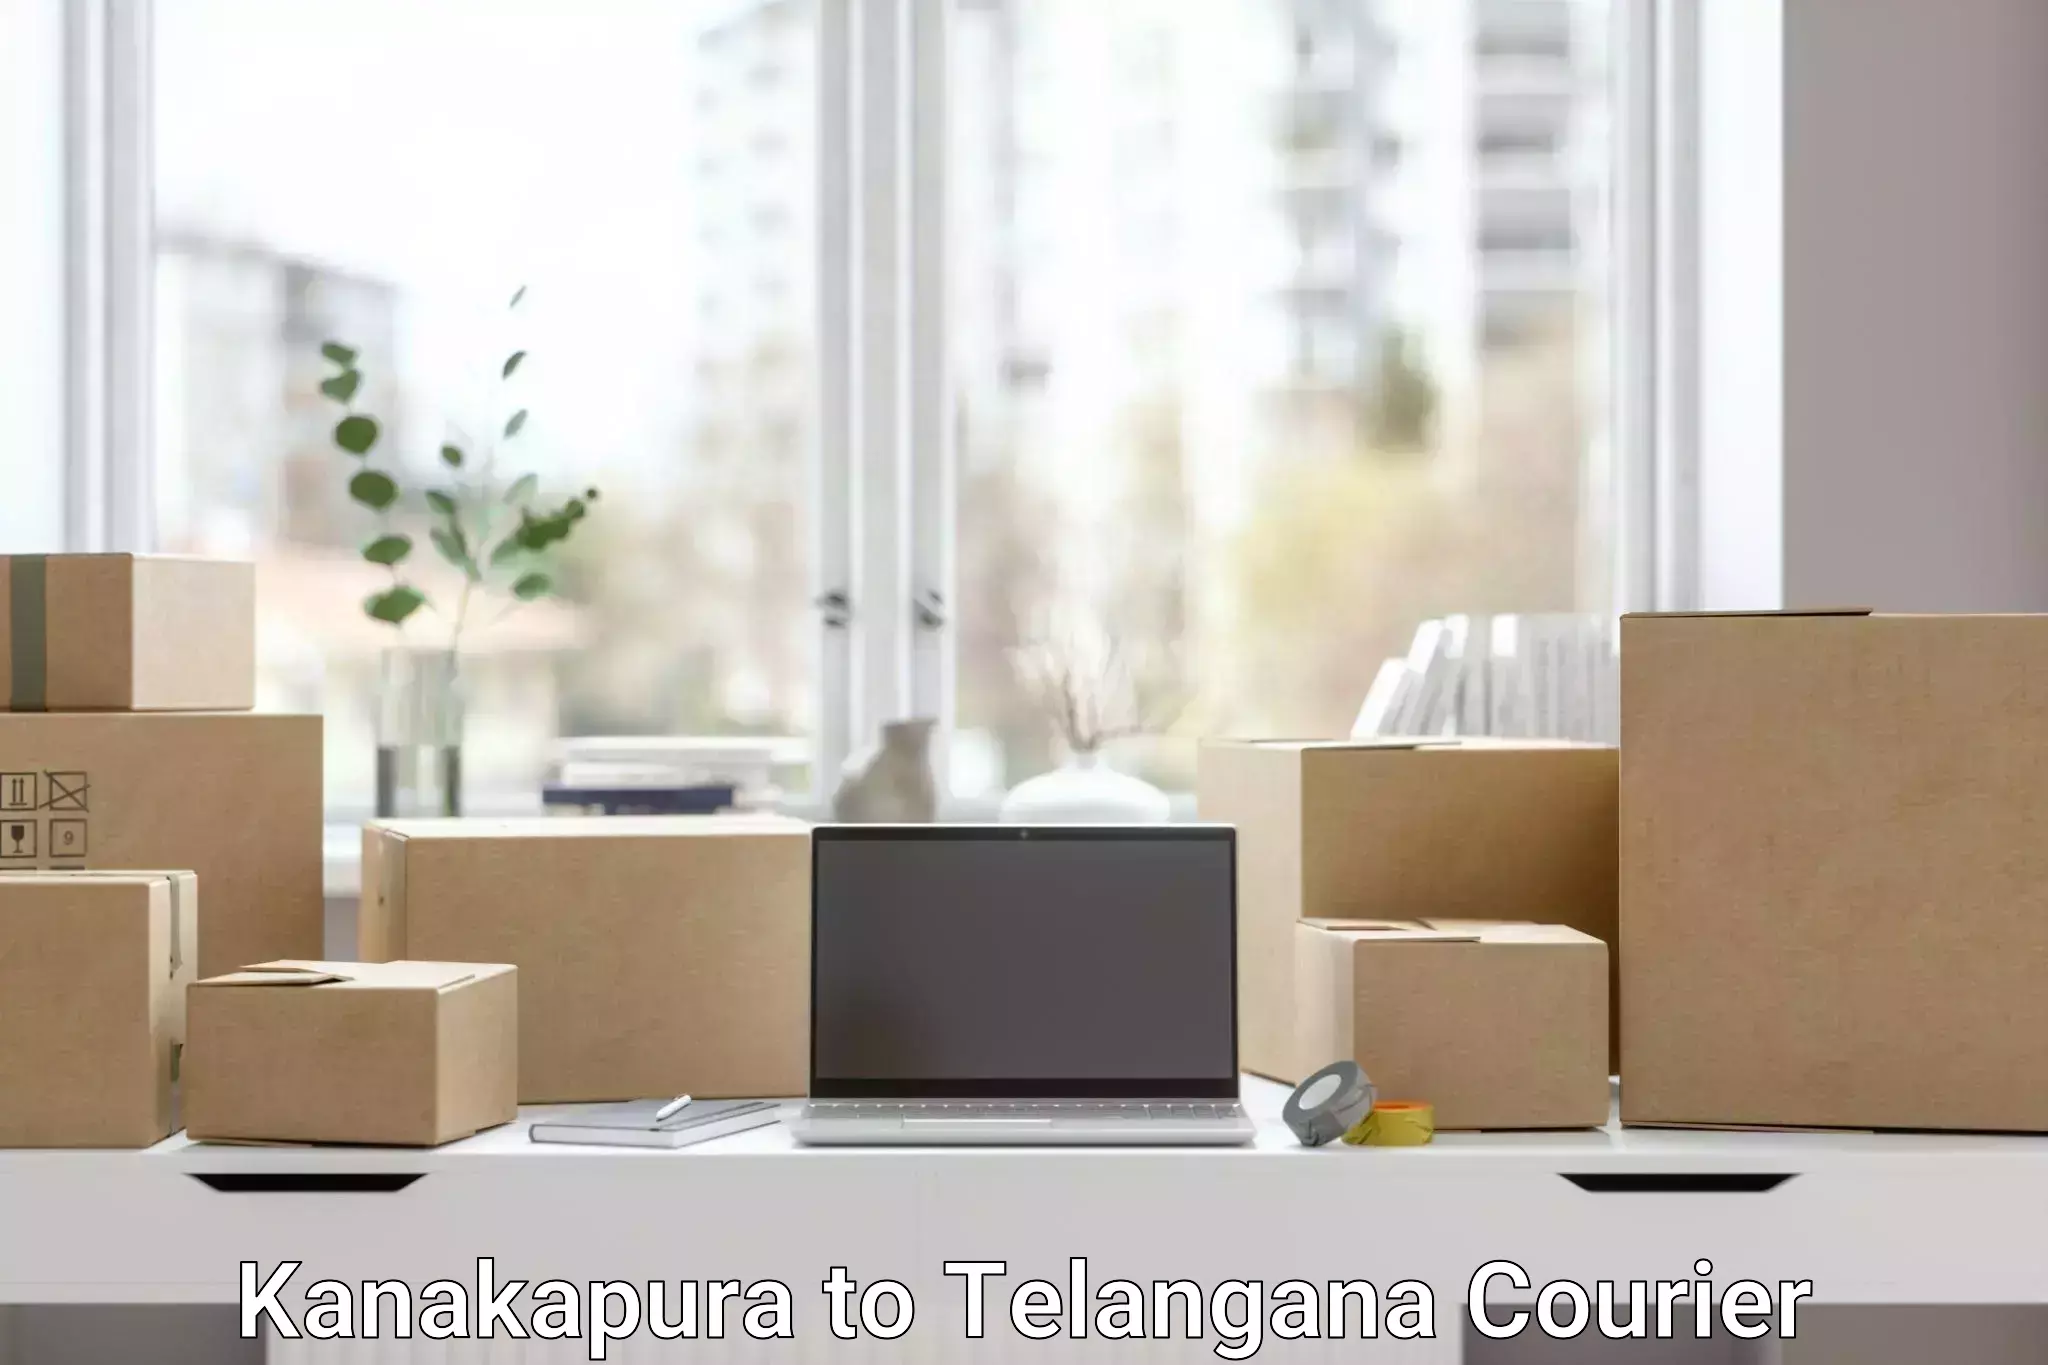 State-of-the-art courier technology Kanakapura to Bellampalli